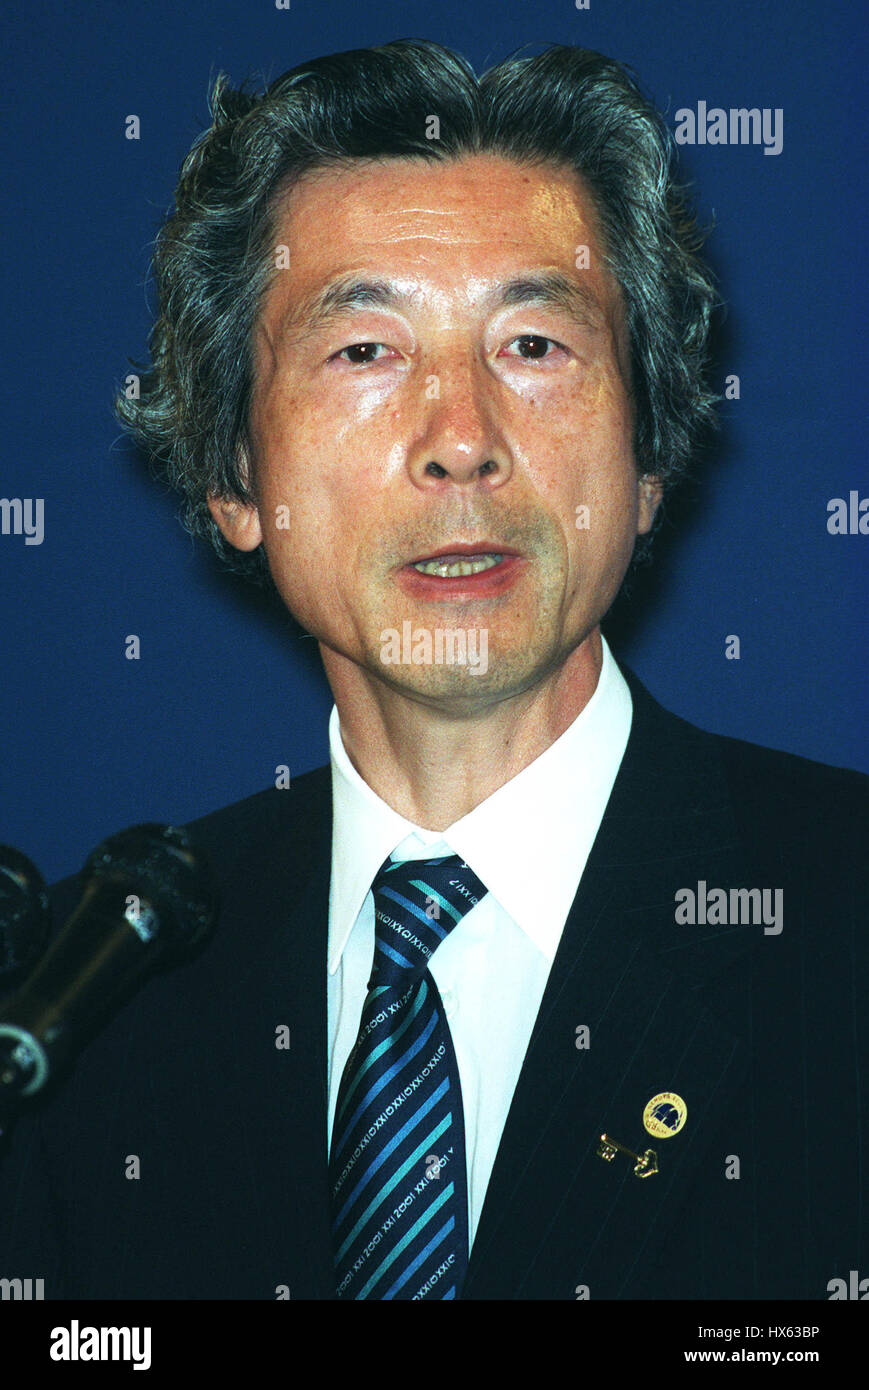 JUNICHIRO KOIZUMI PRIME MINISTER OF JAPAN 23 July 2001 G8 SUMMIT GENOA ITALY Stock Photo